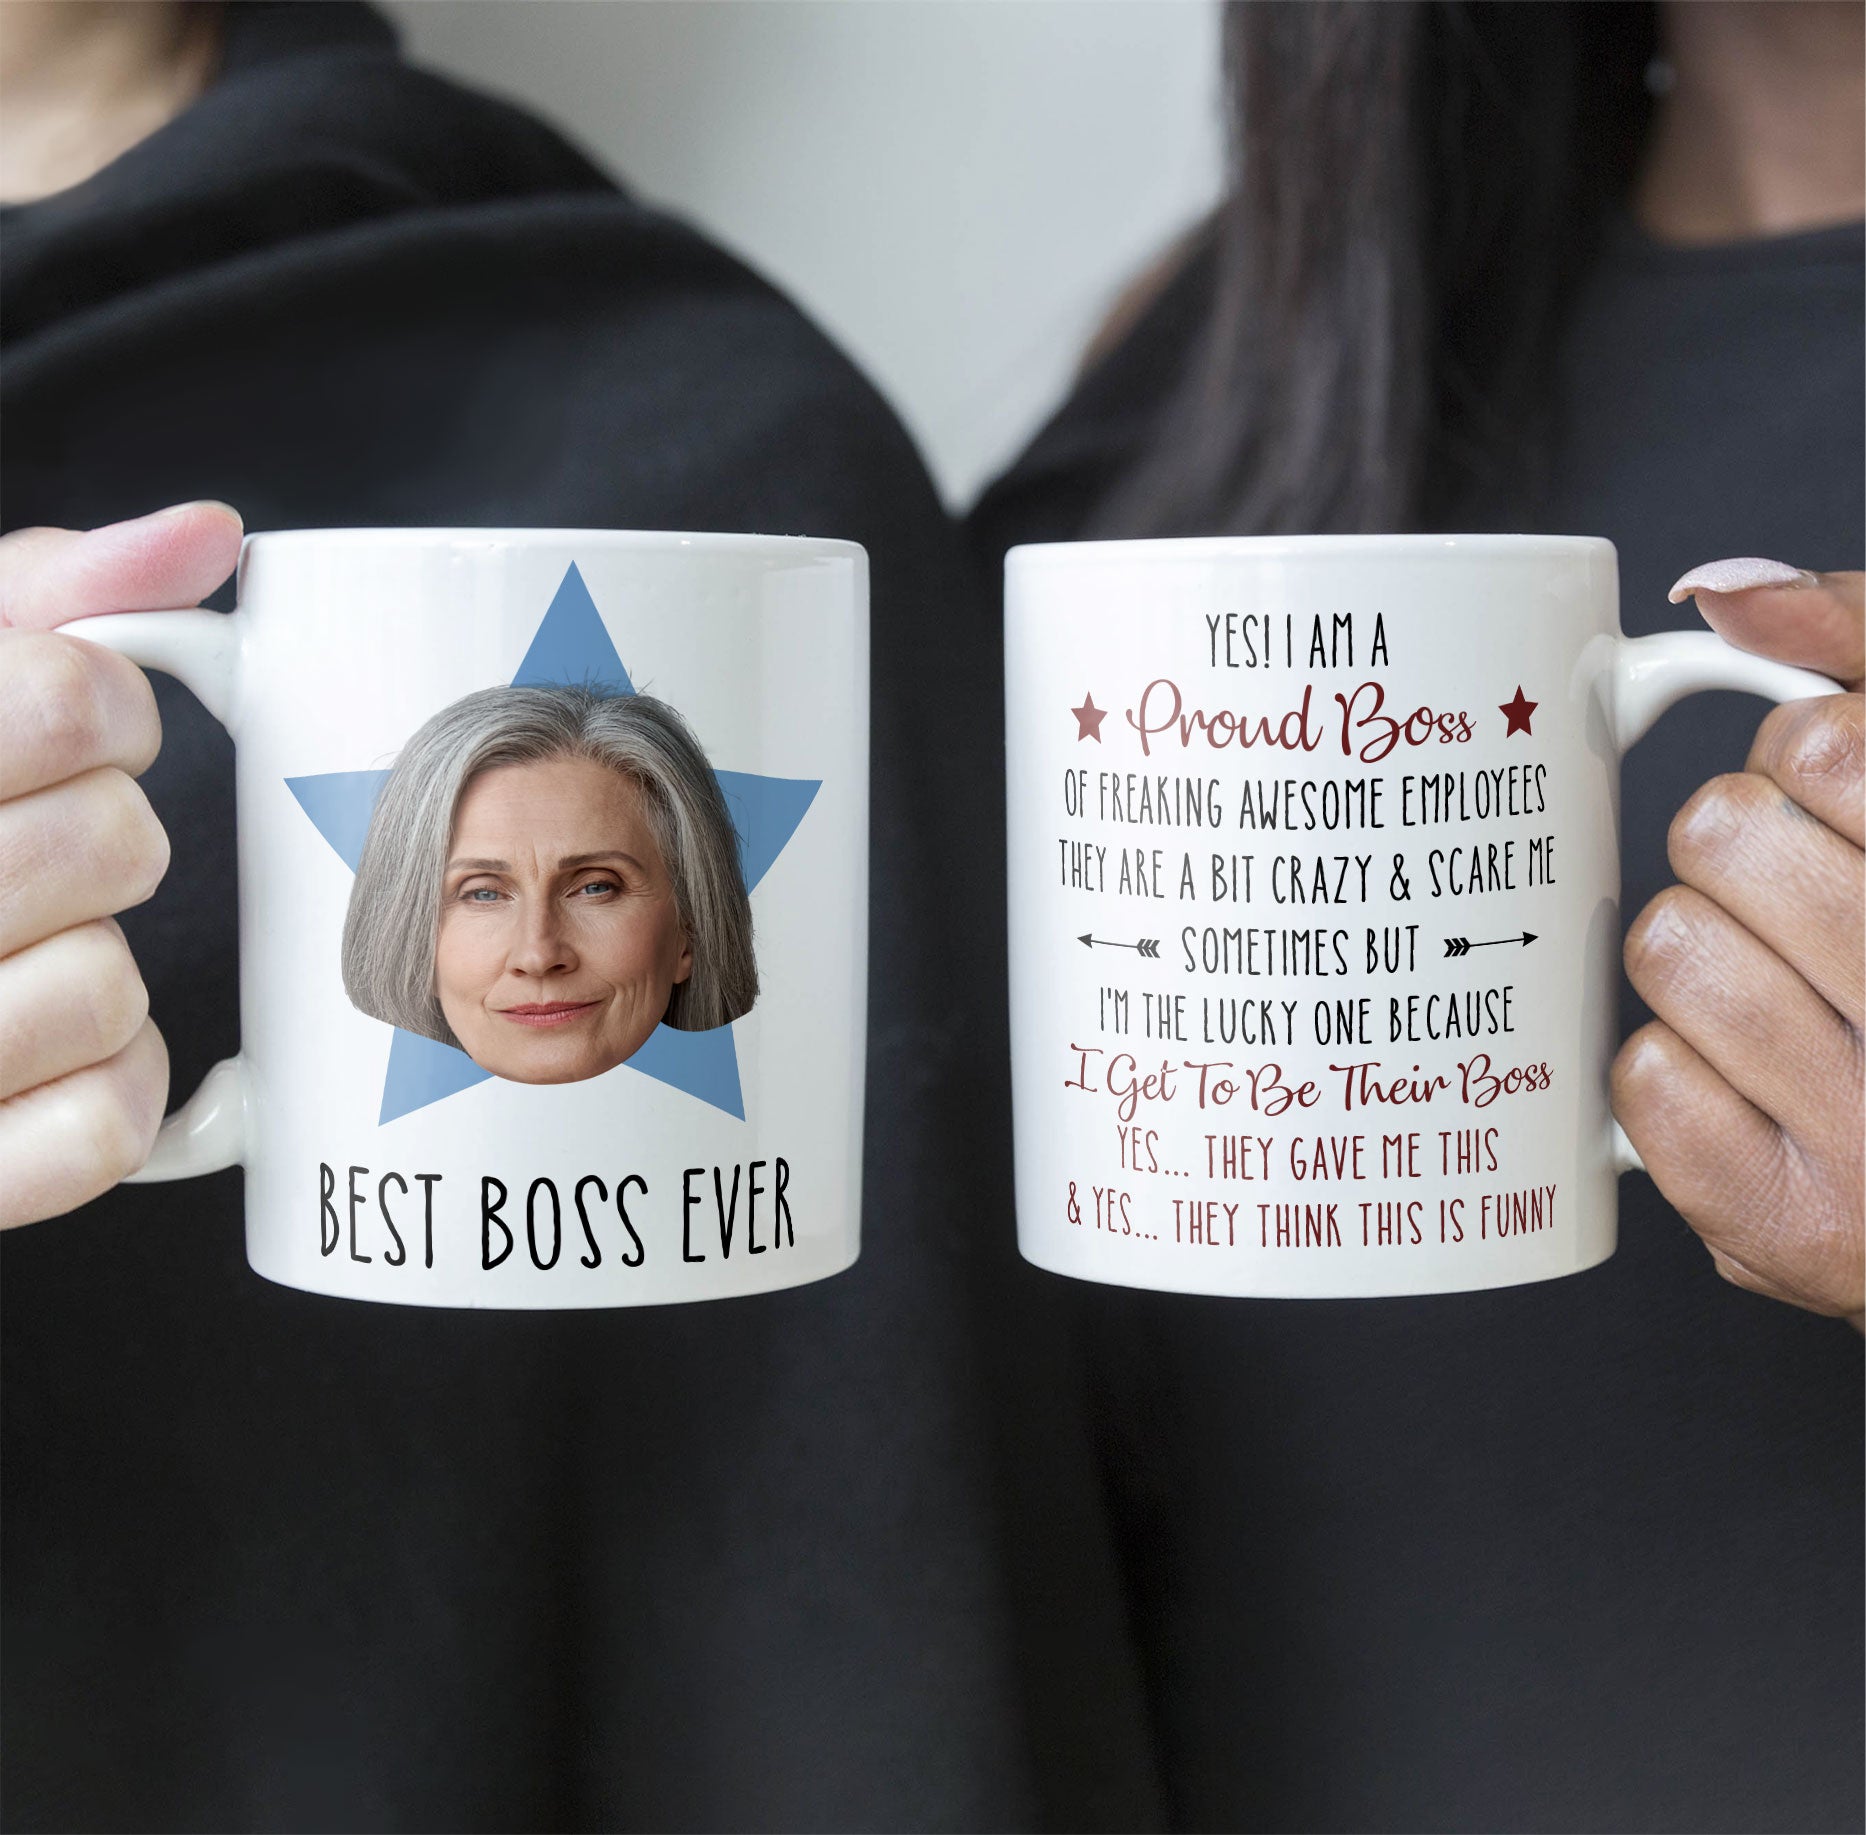 Best Boss Ever - Personalized Photo Mug